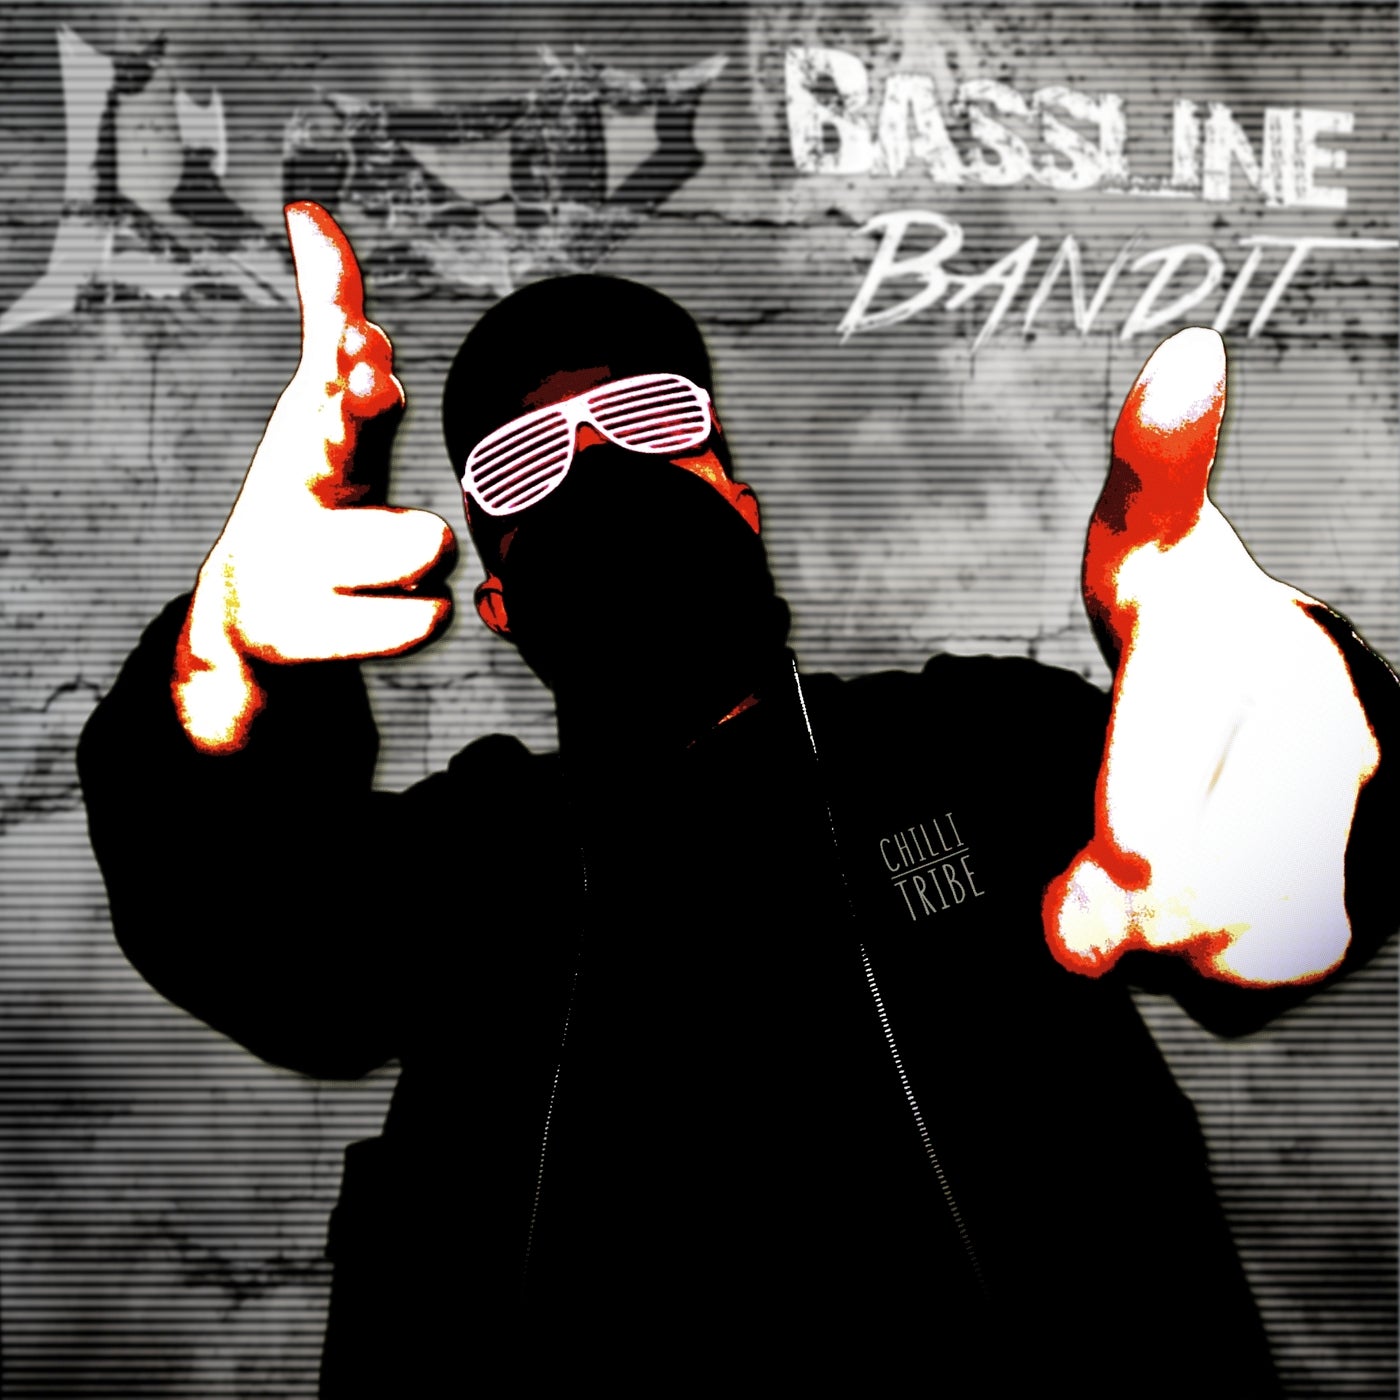 Bassline Bandit